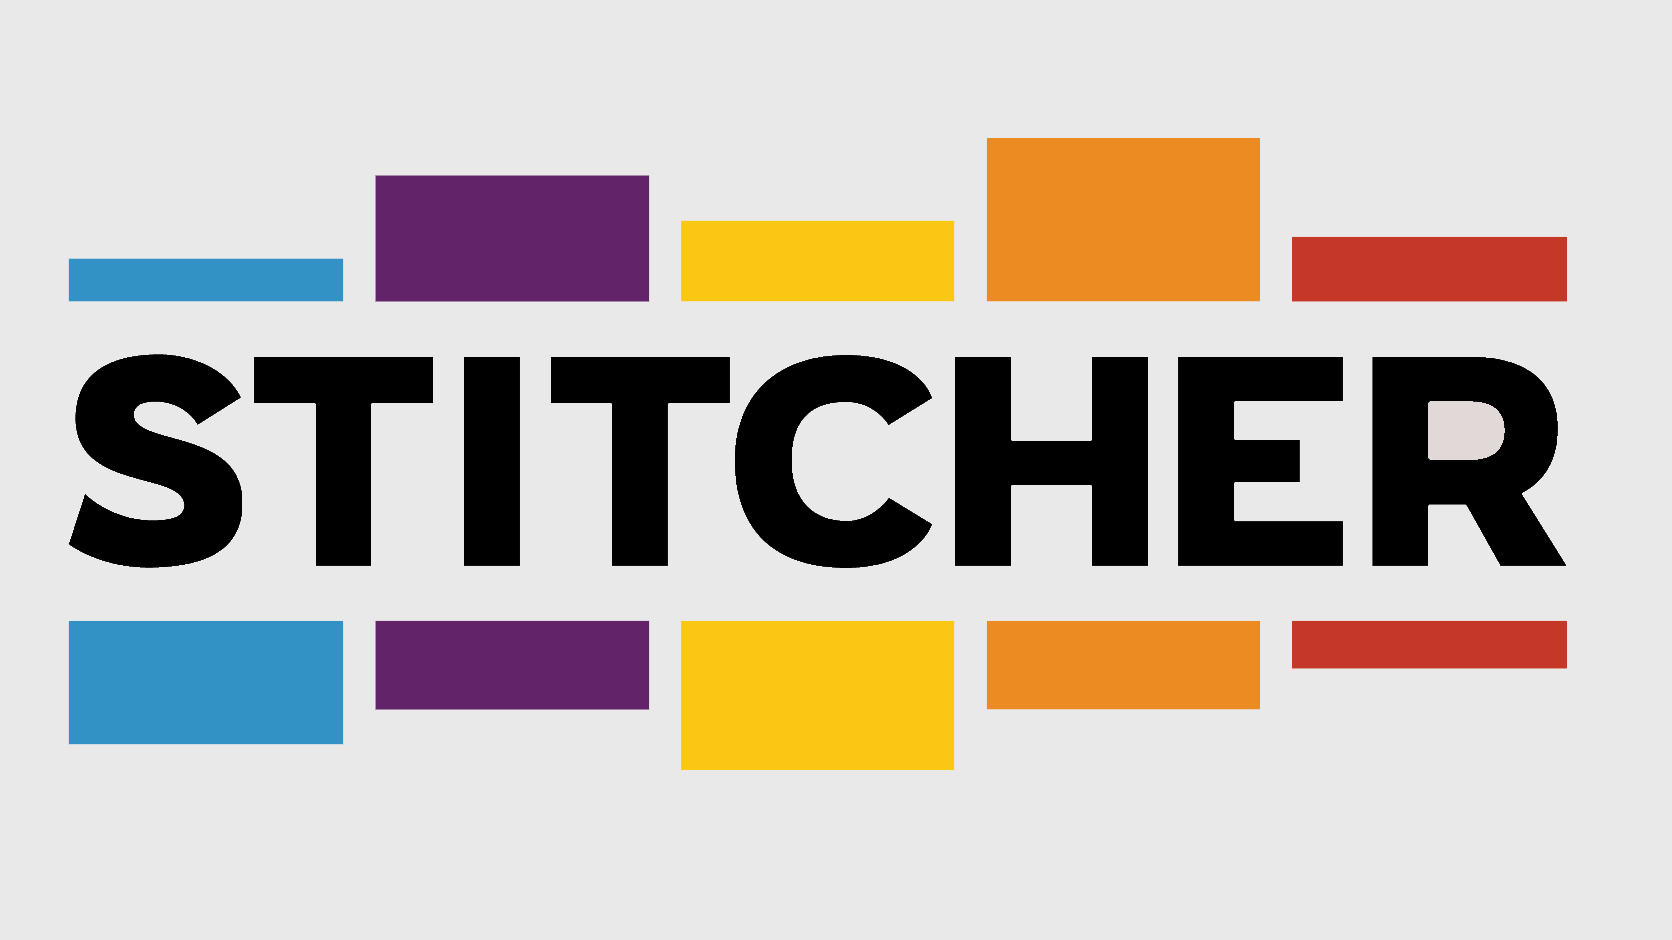 stitcher_logo